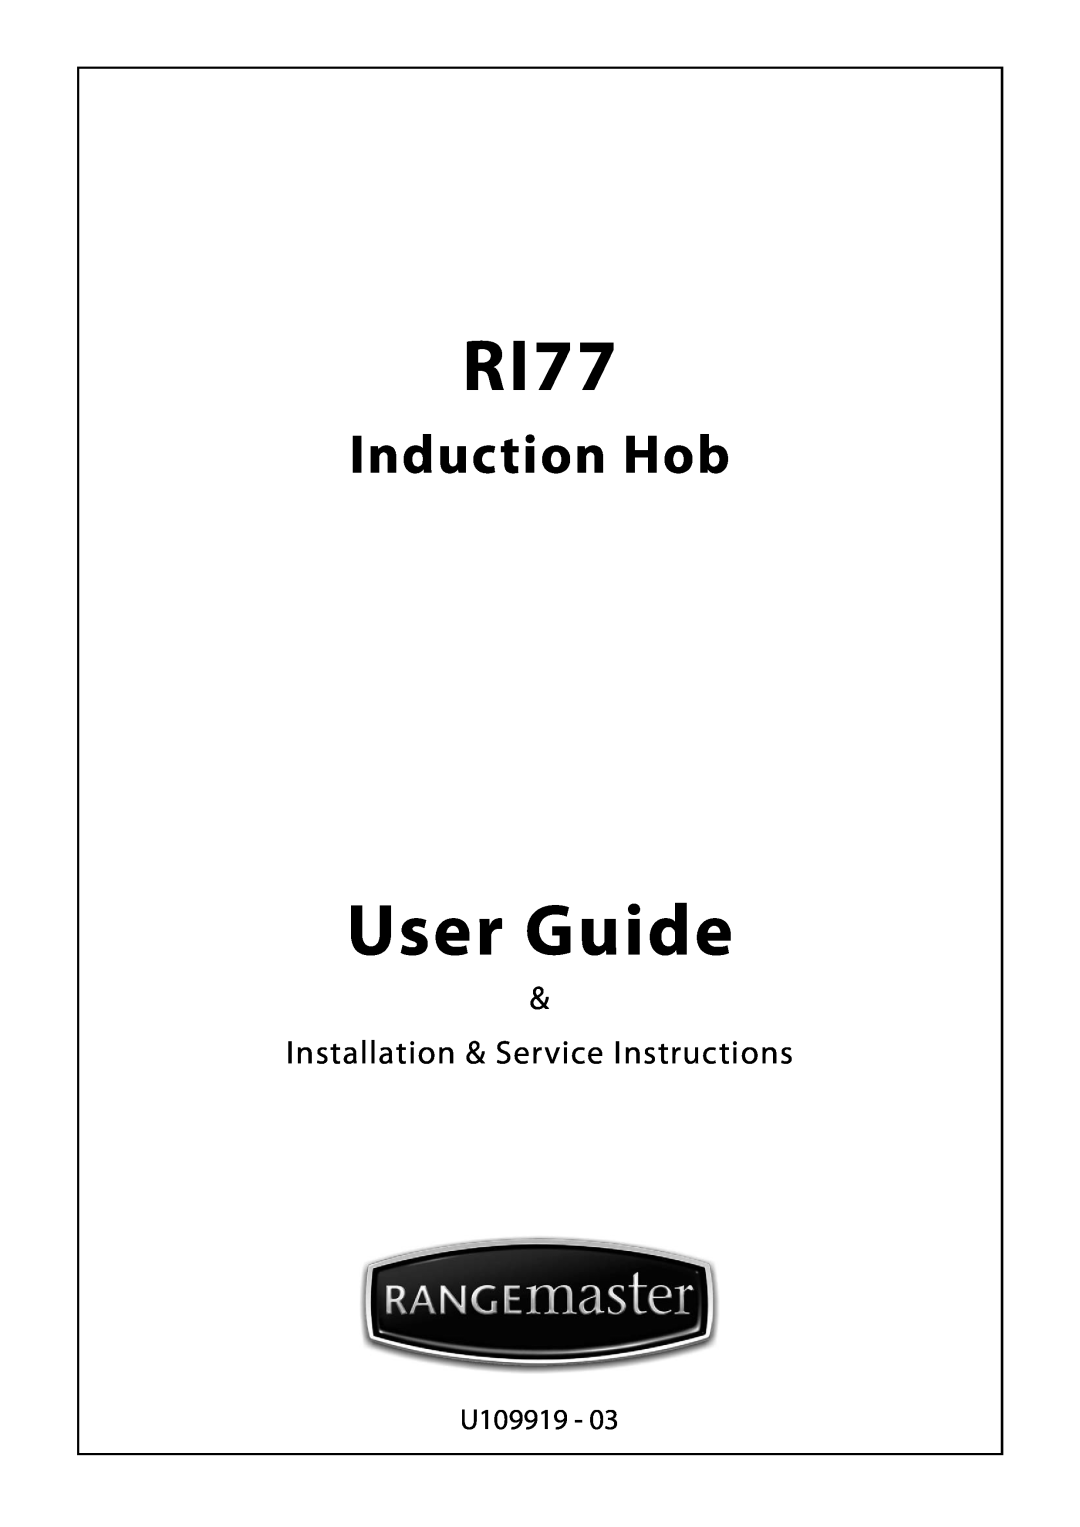 Rangemaster RI77 manual User Guide, Induction Hob, Installation & Service Instructions, U109919 